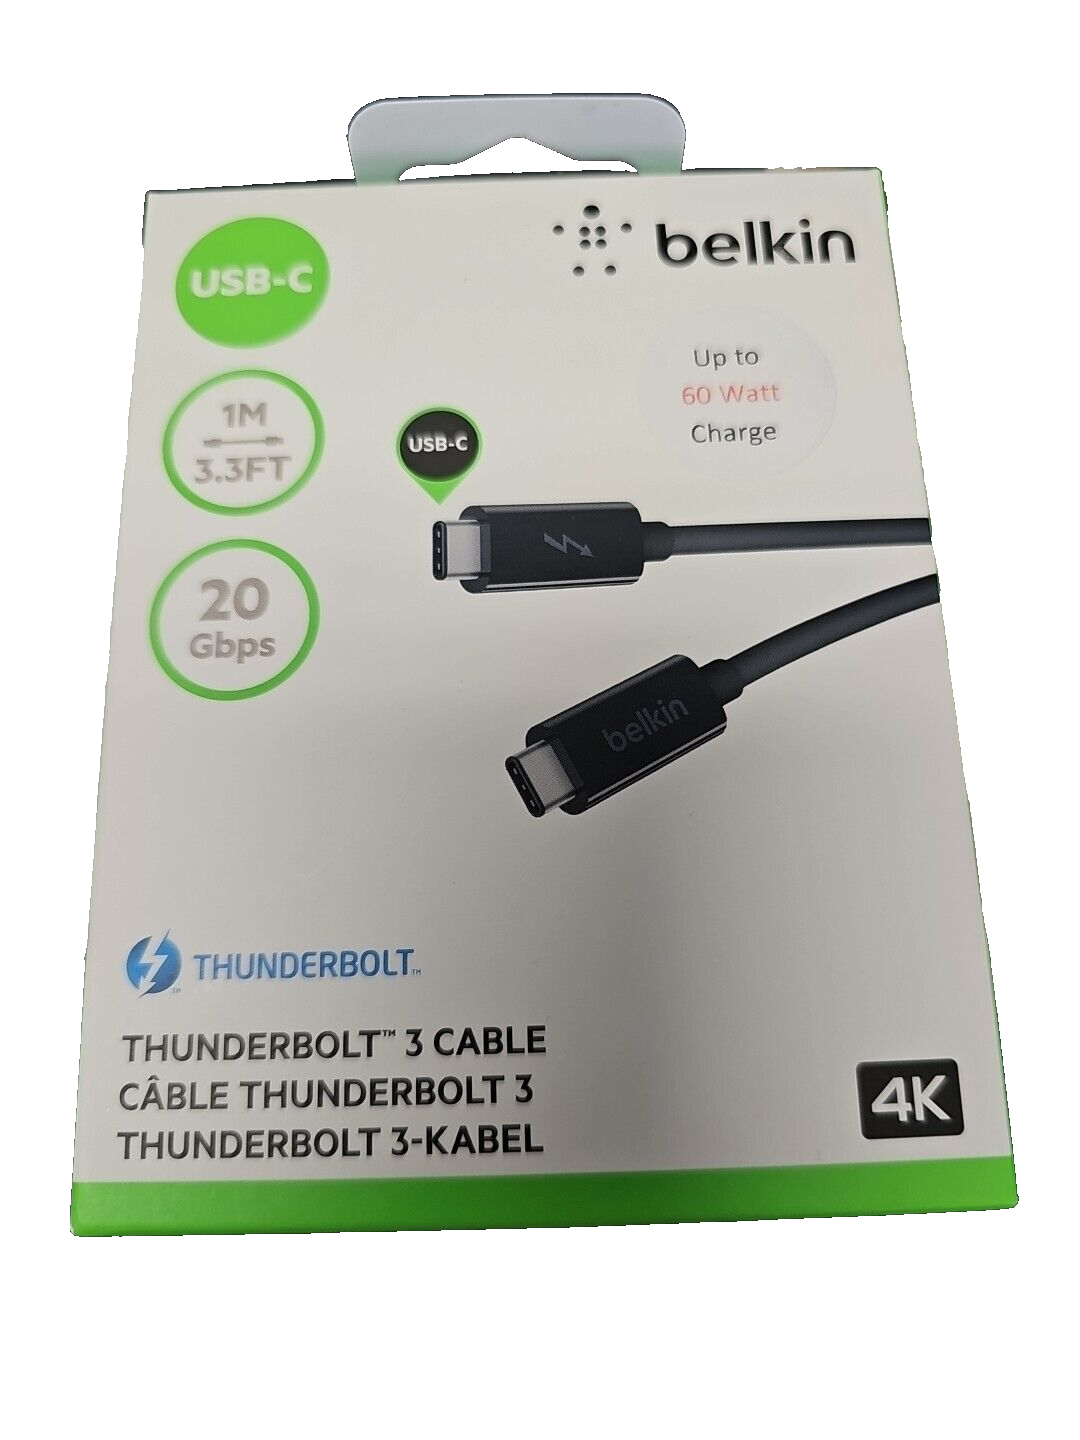 Belkin Thunderbolt 3USB C To USB C Data Transfer Power Cable 3.3ft 1M 20GBps